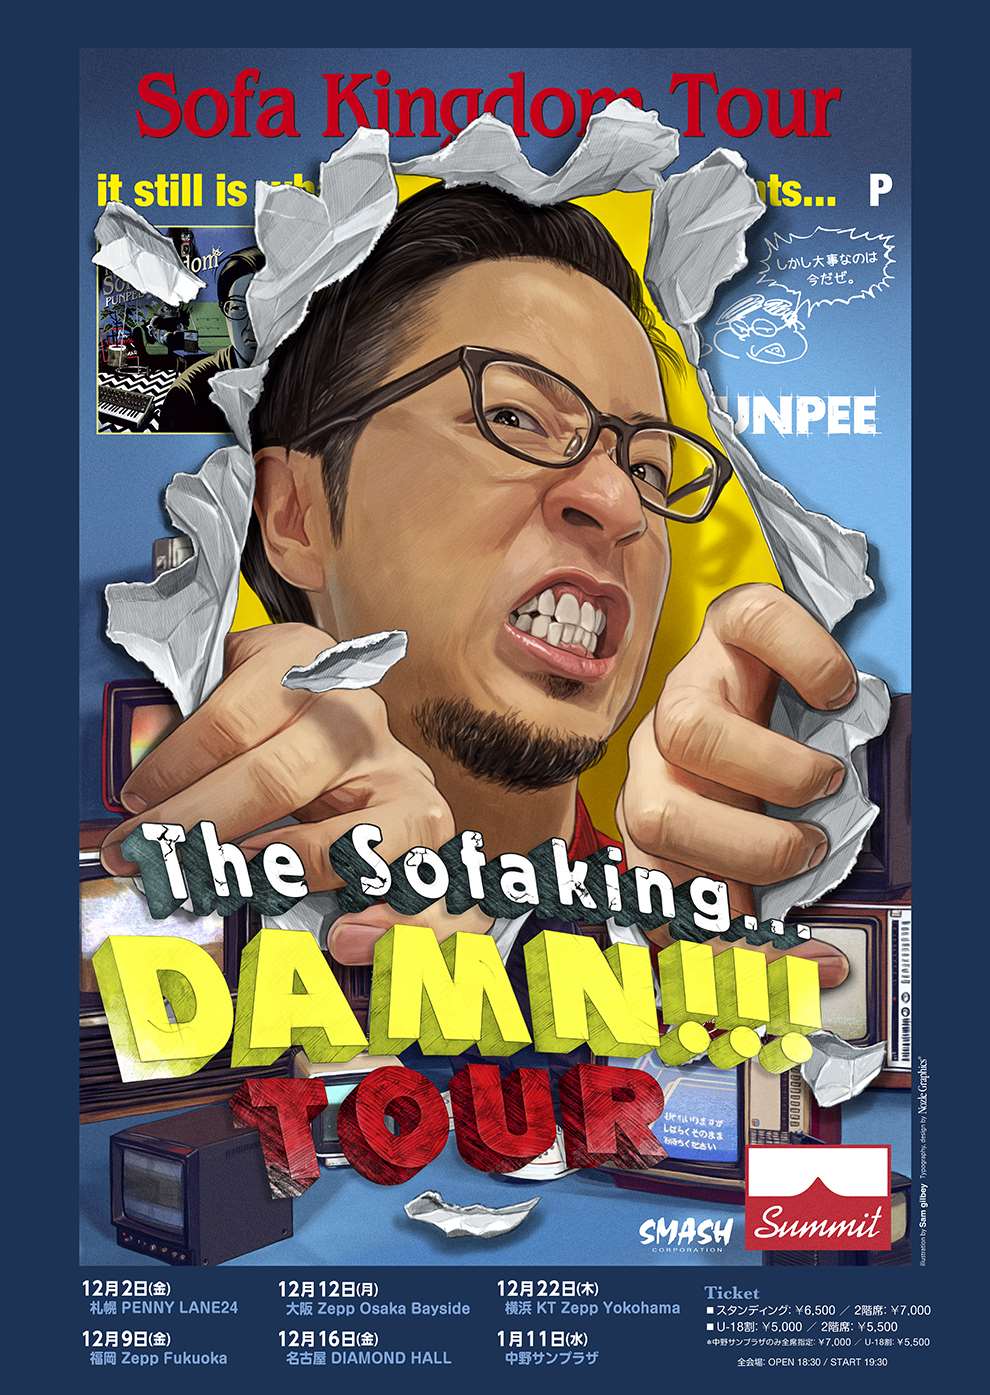 Sam  Gilbey, Poster design for Japanese rapper, PUNPEE: 'The Sofataking Damn Tour'.